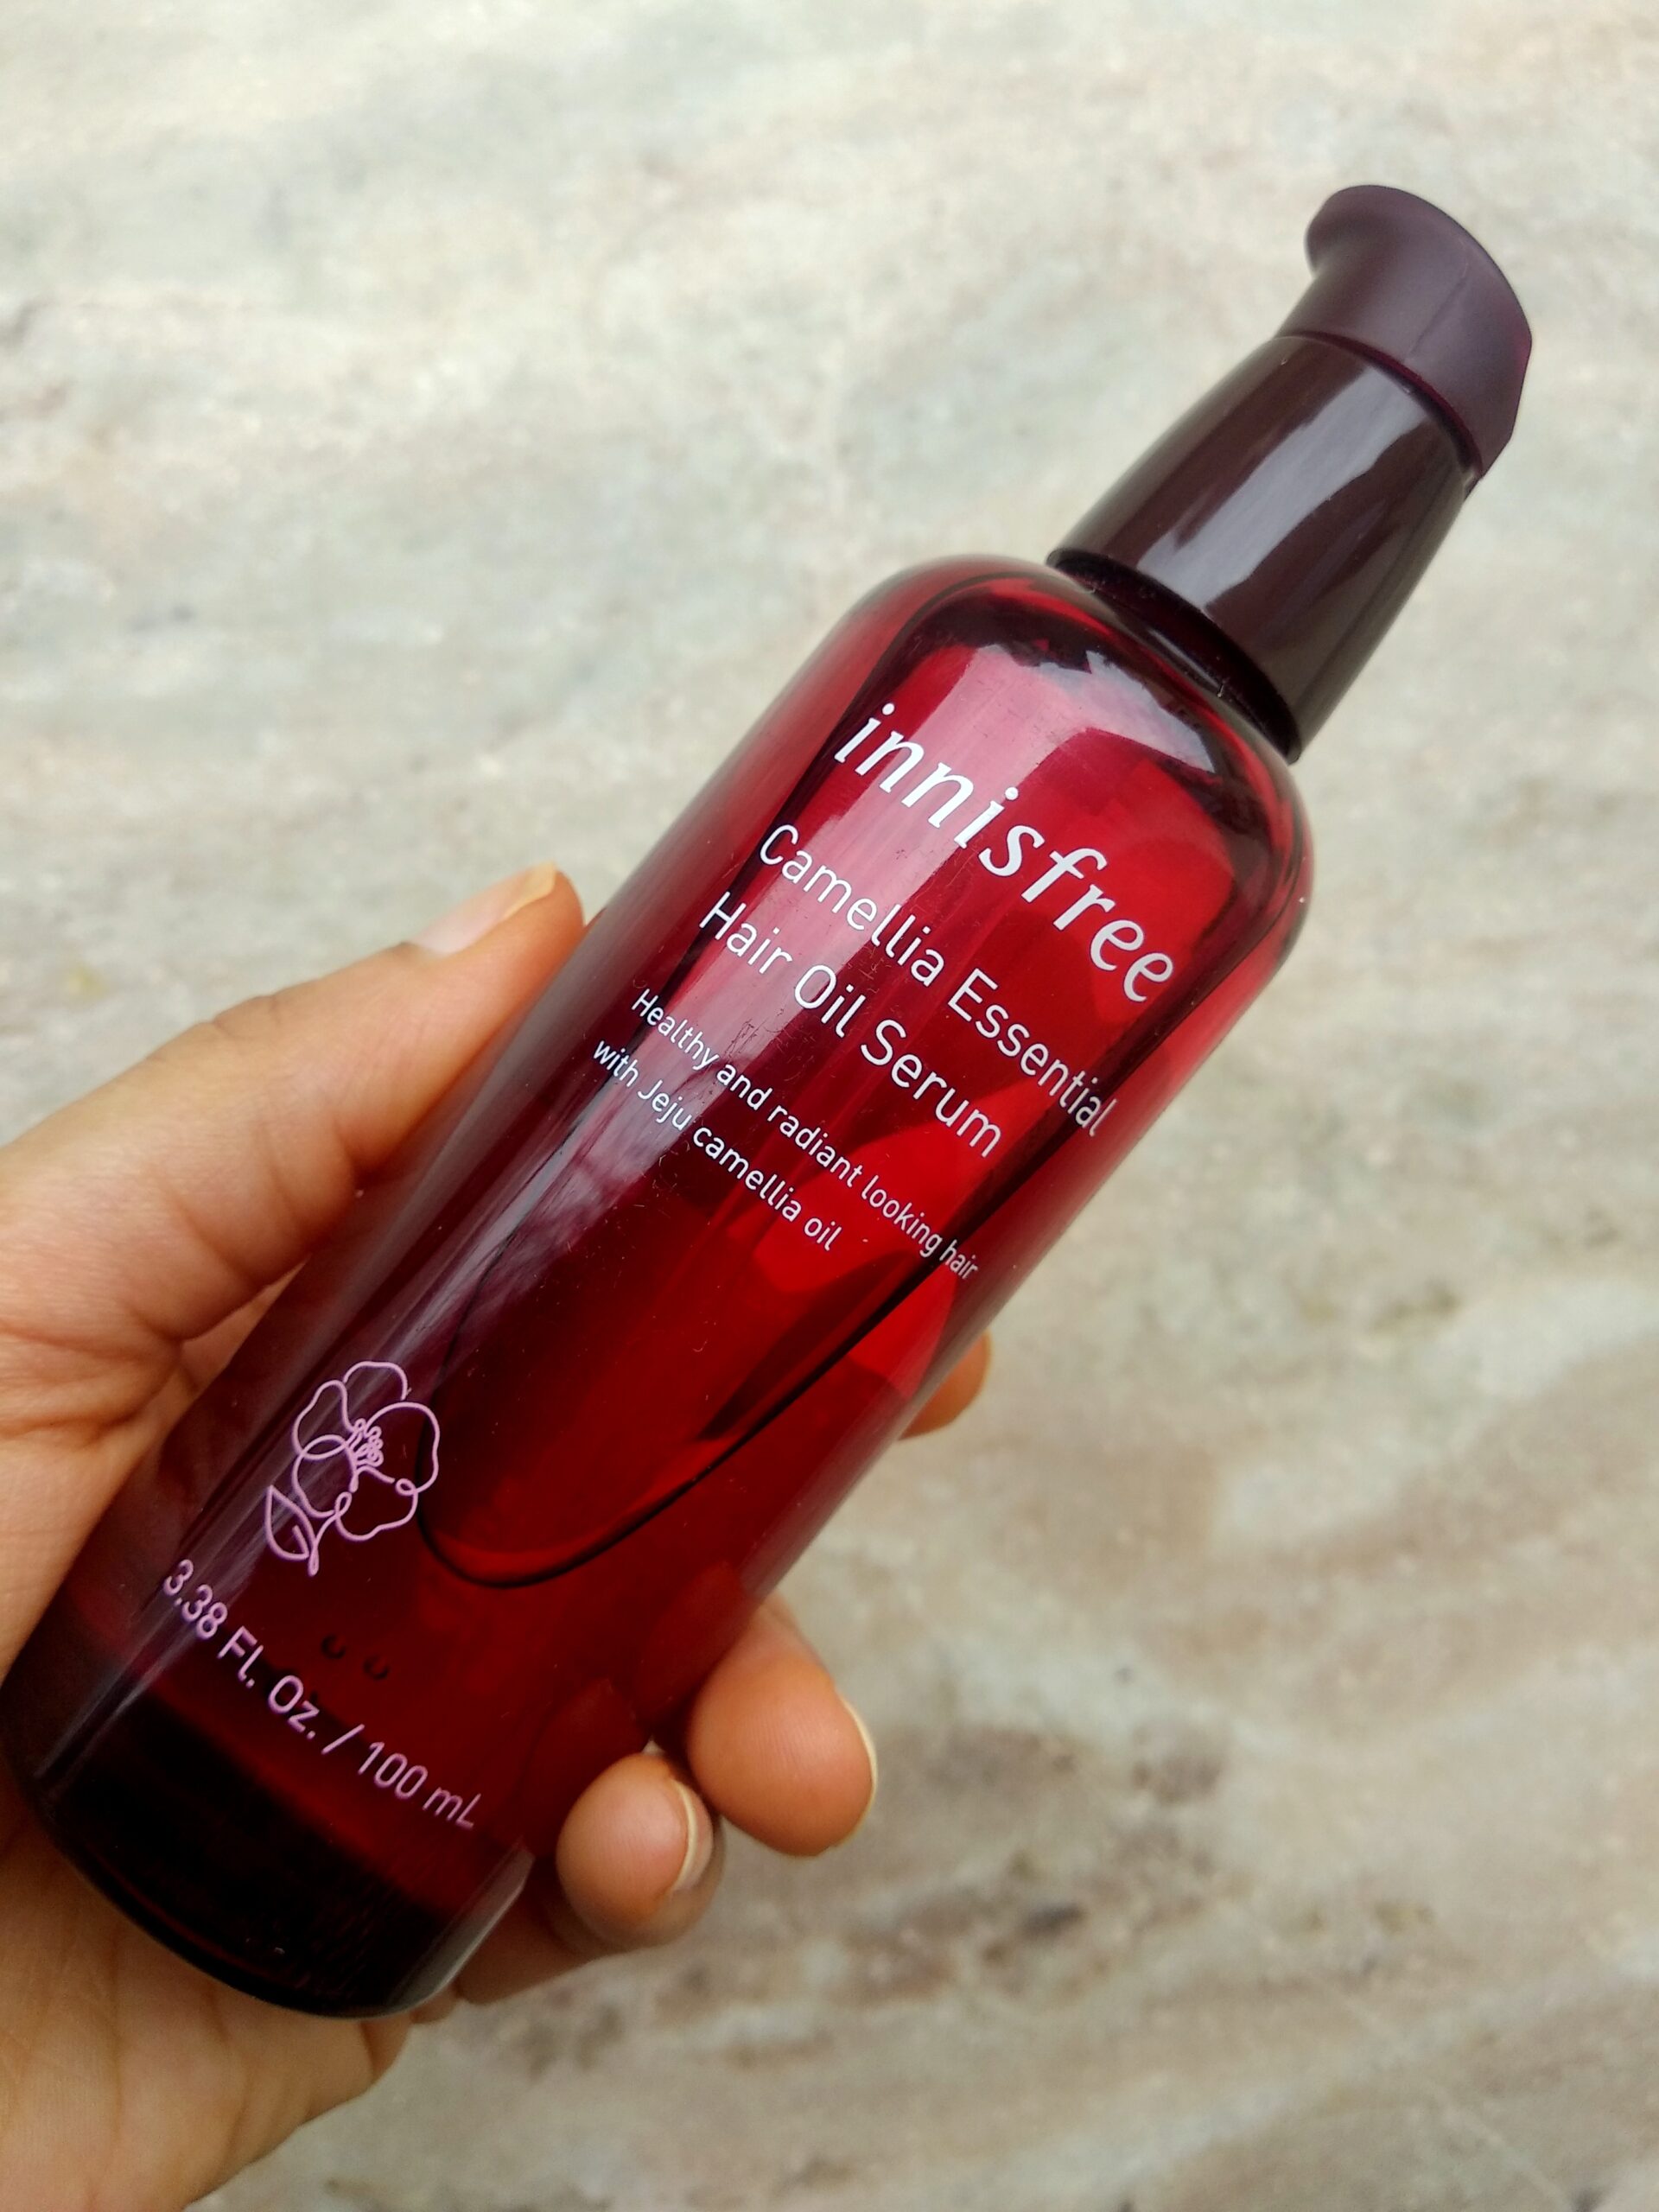 Innisfree Camelia essential hair oil serum review